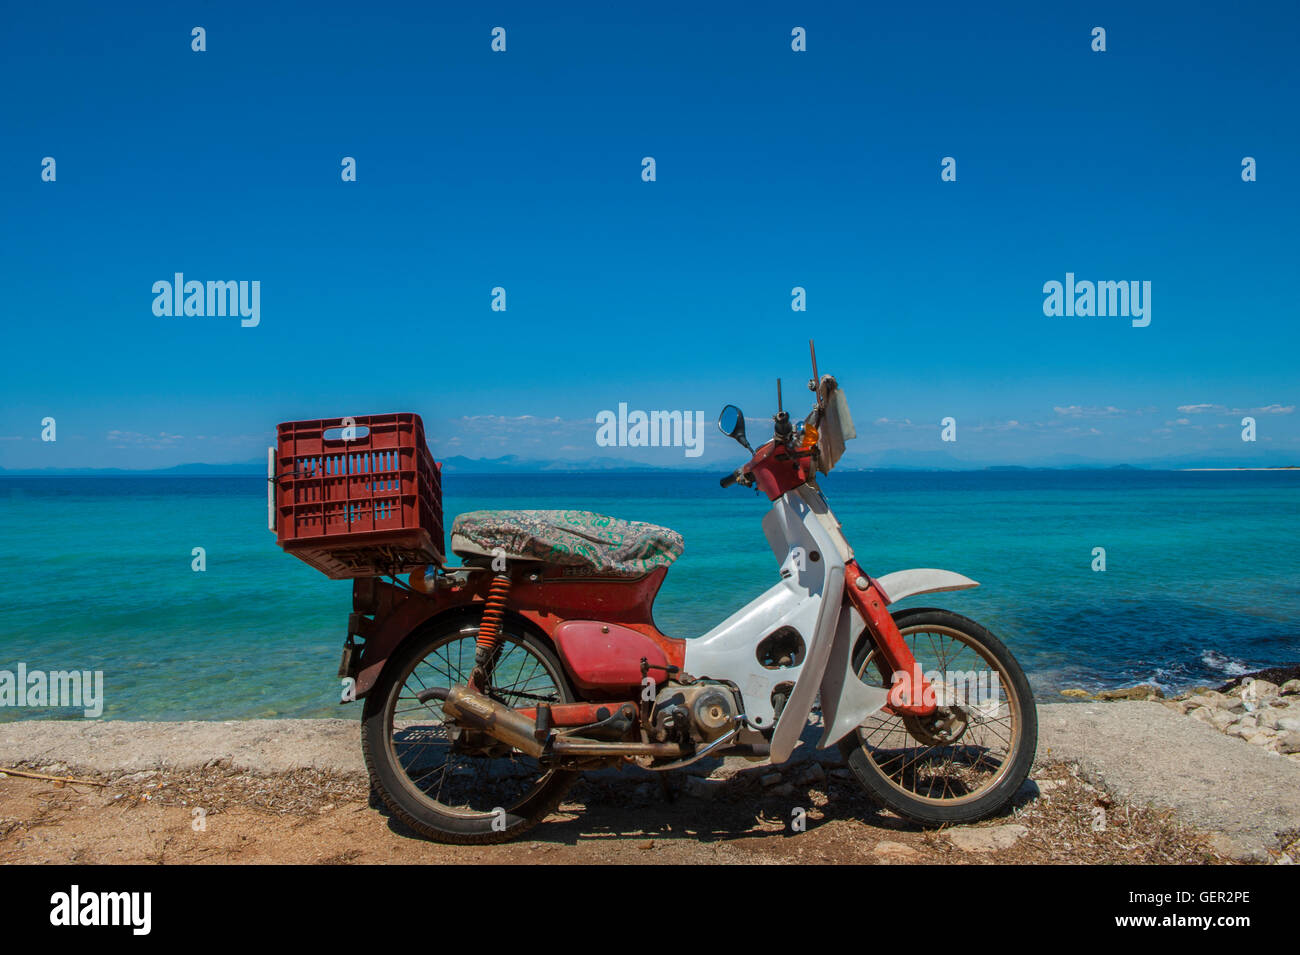 Un solitario, vecchio ciclomotore su una spiaggia deserta in Grecia Foto Stock